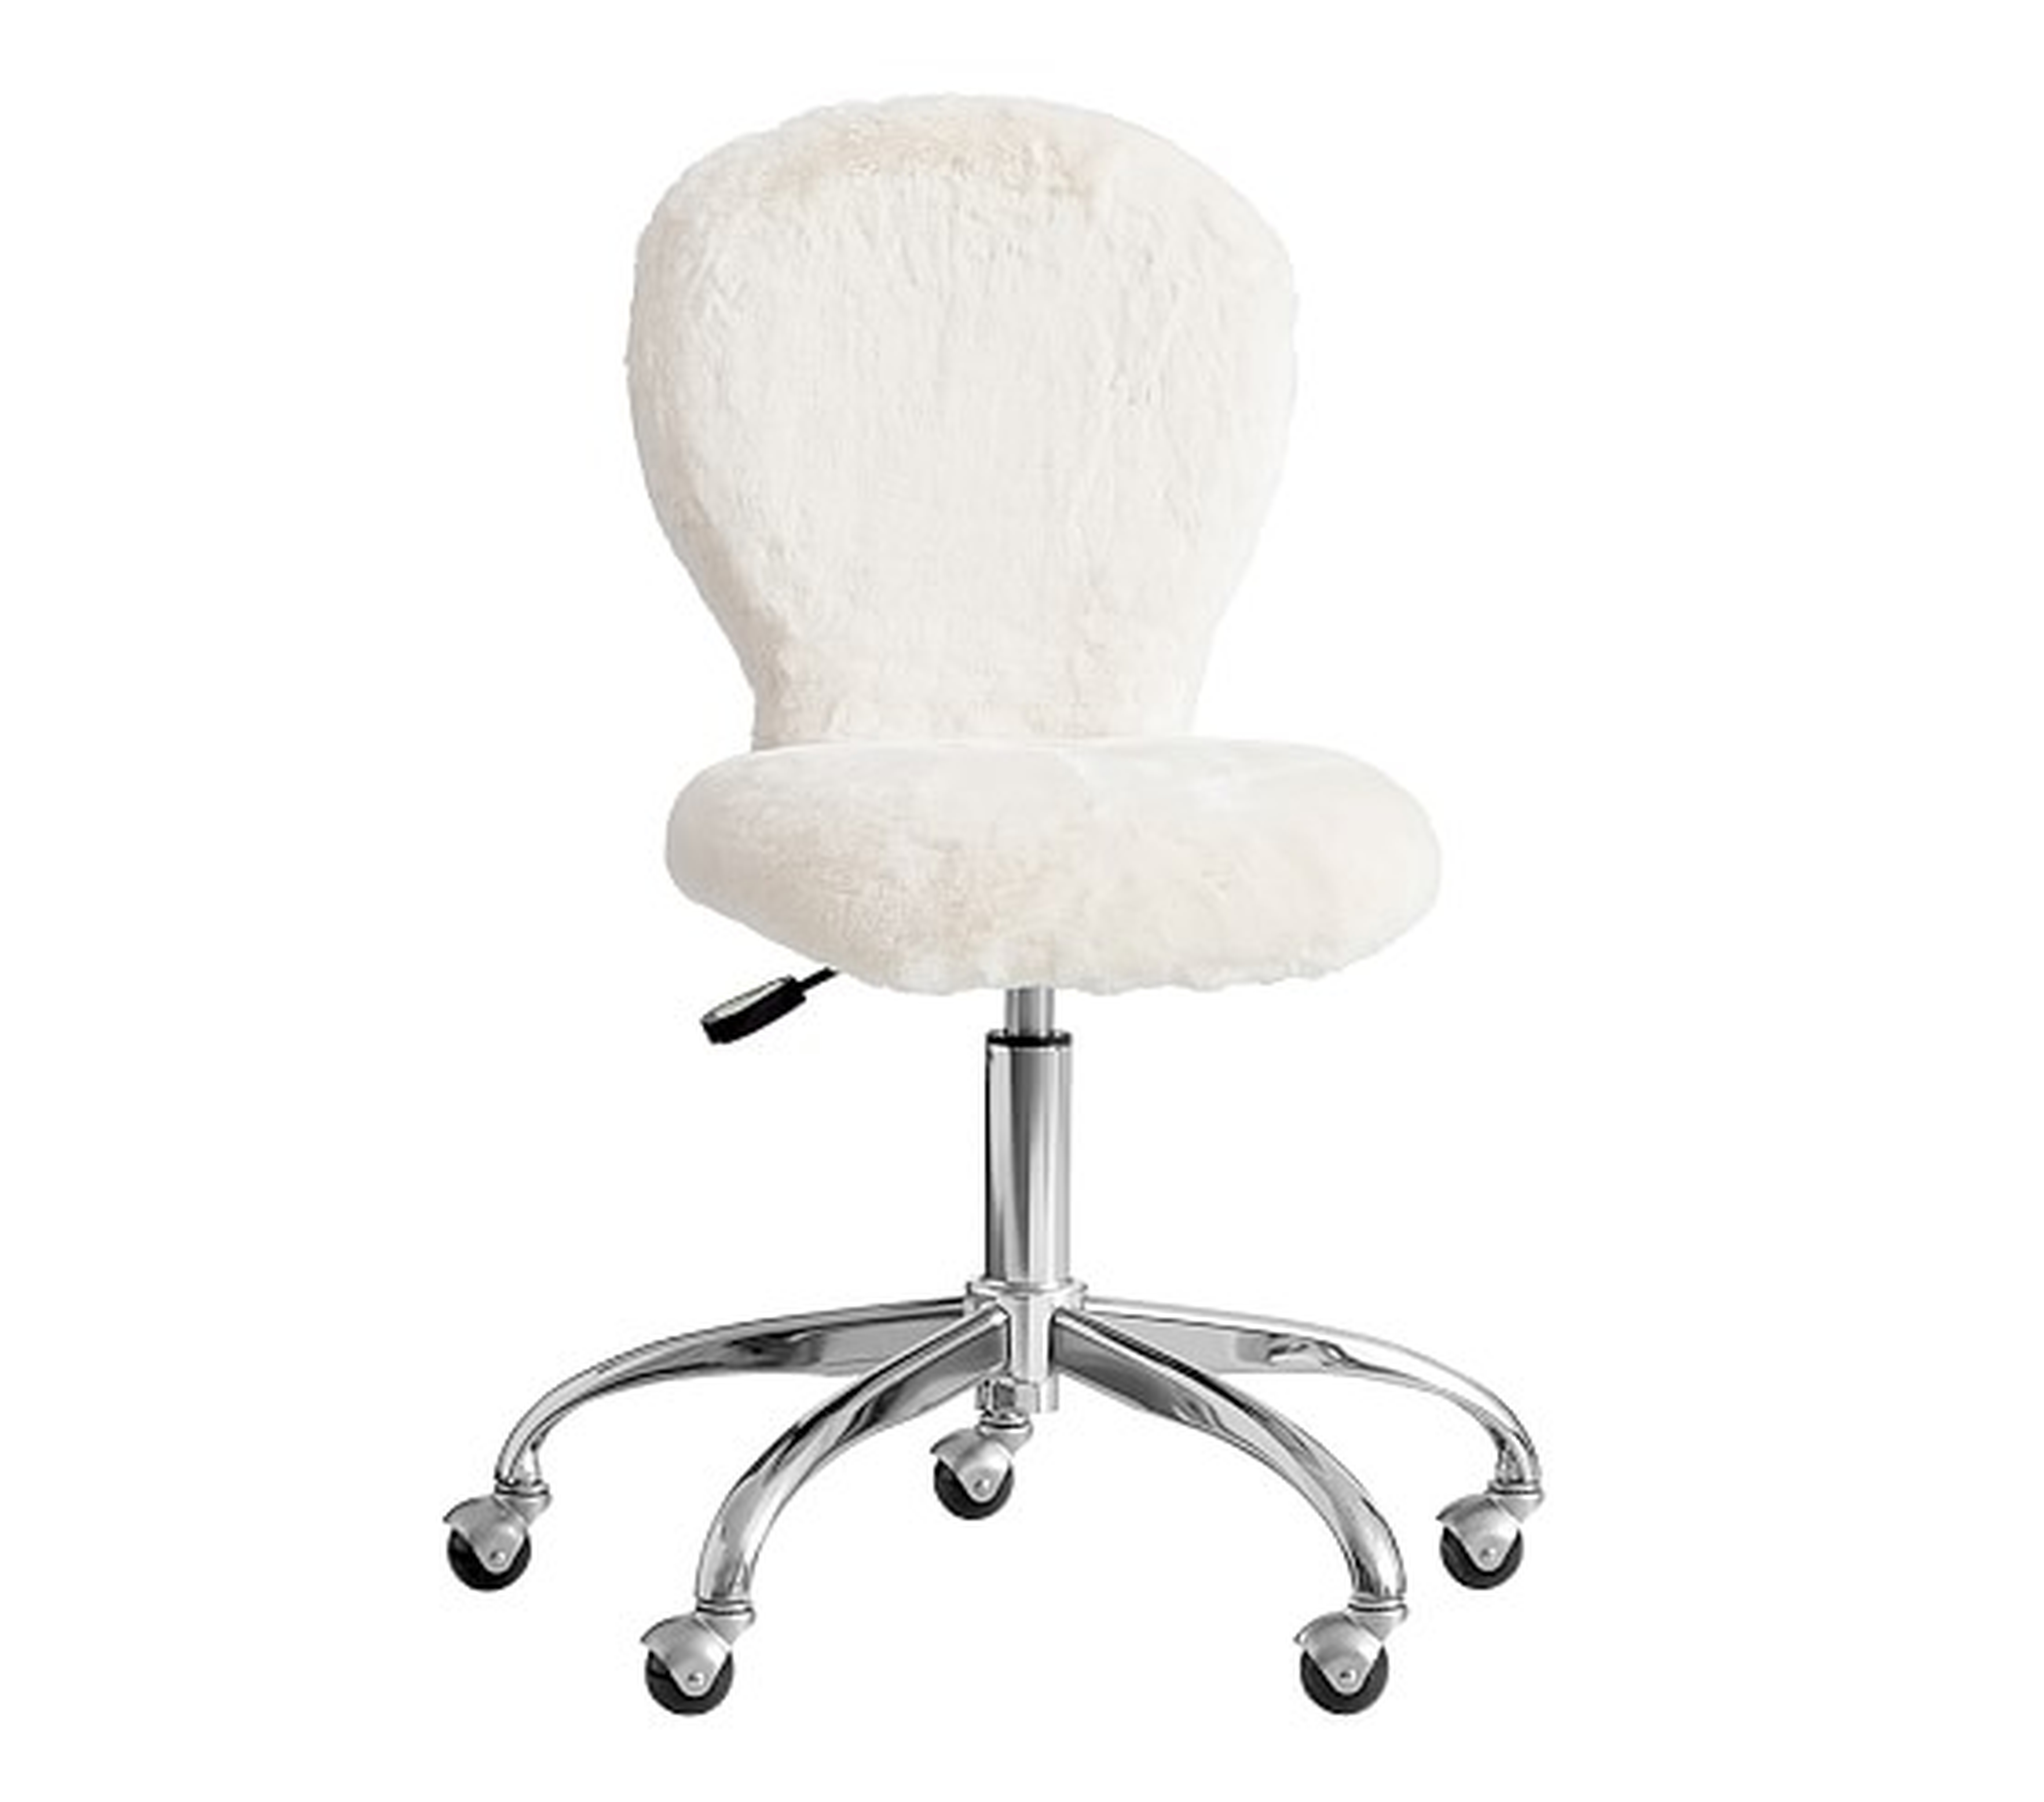 Round Upholstered Desk Chair, Brushed Nickel Base - Pottery Barn Kids